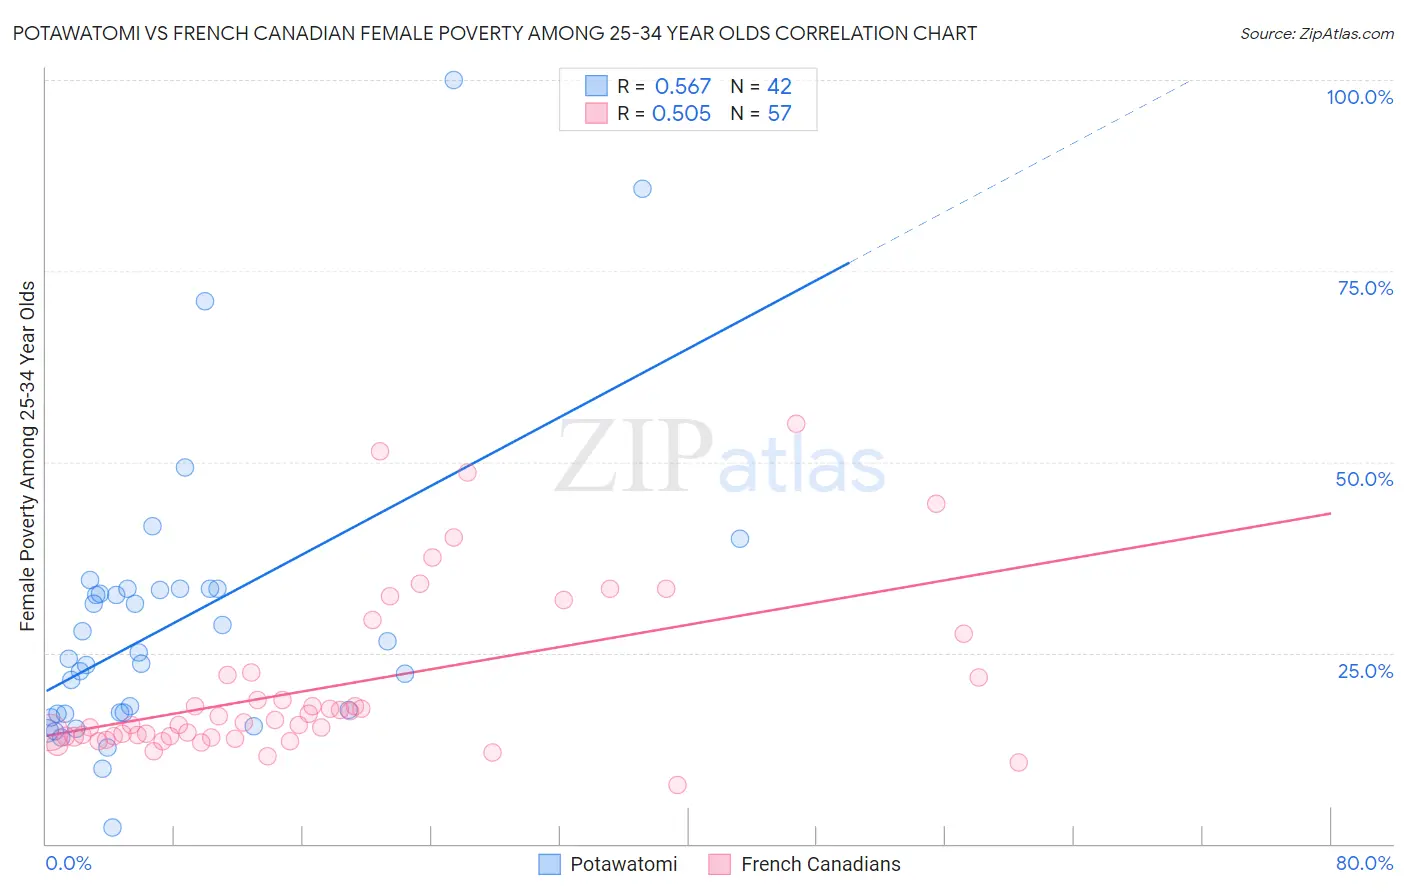 Potawatomi vs French Canadian Female Poverty Among 25-34 Year Olds